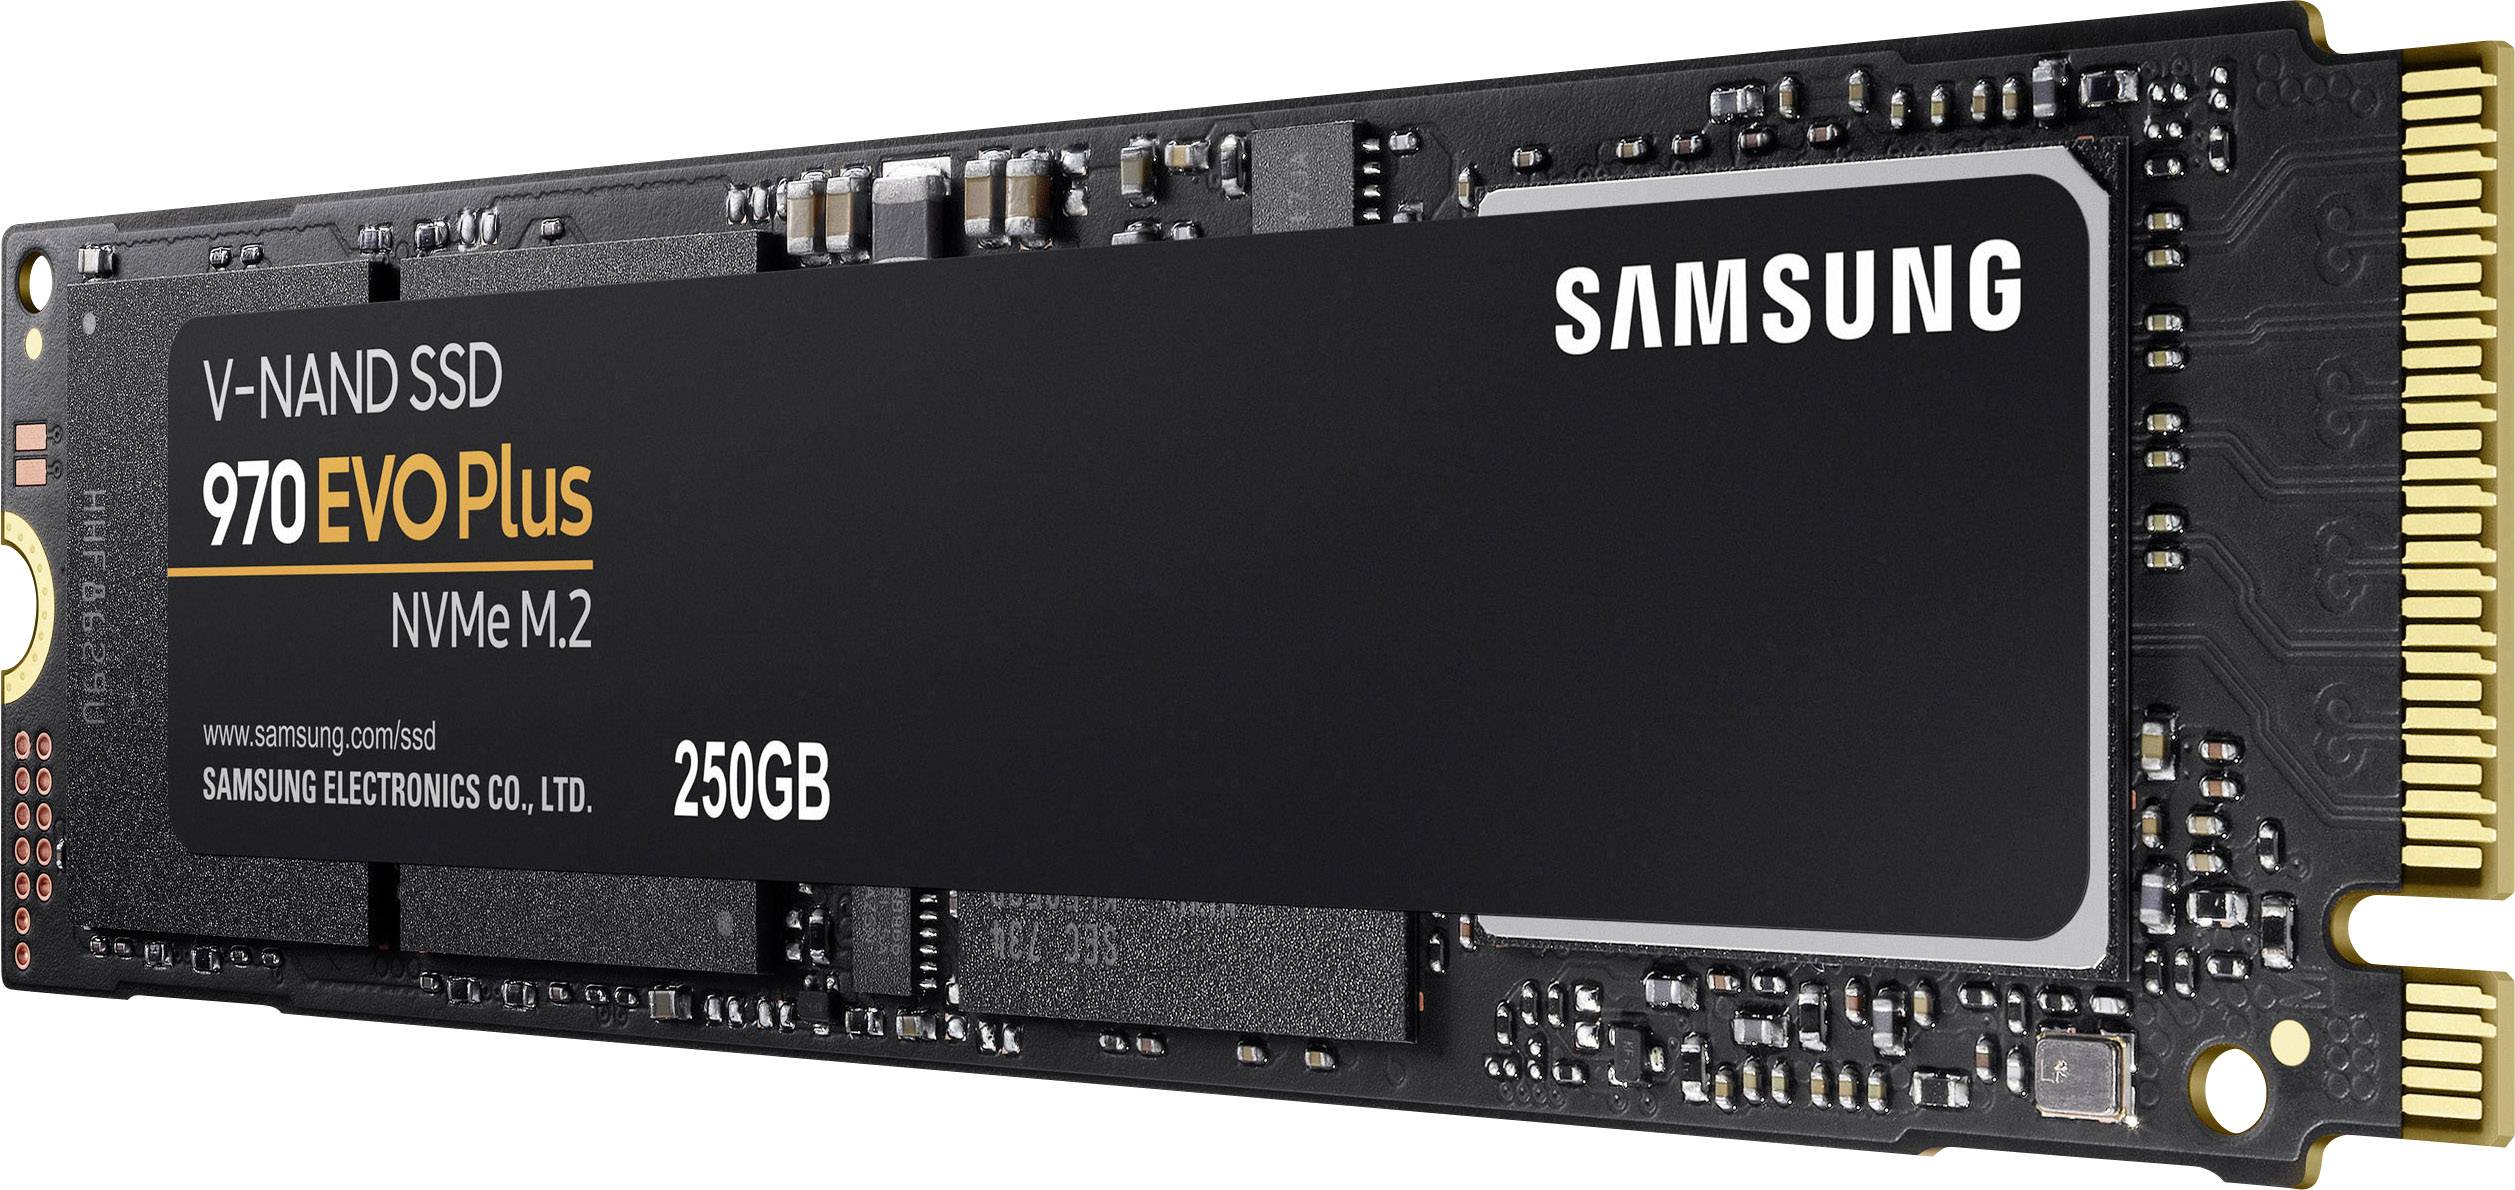 Fortolke kinakål alligevel Samsung 970 EVO Plus 250 GB Intern NVMe/PCIe M.2 SSD M.2 NVMe PCIe 3.0 x 4  Retail MZ-V7S250BW | Conradelektronik.dk